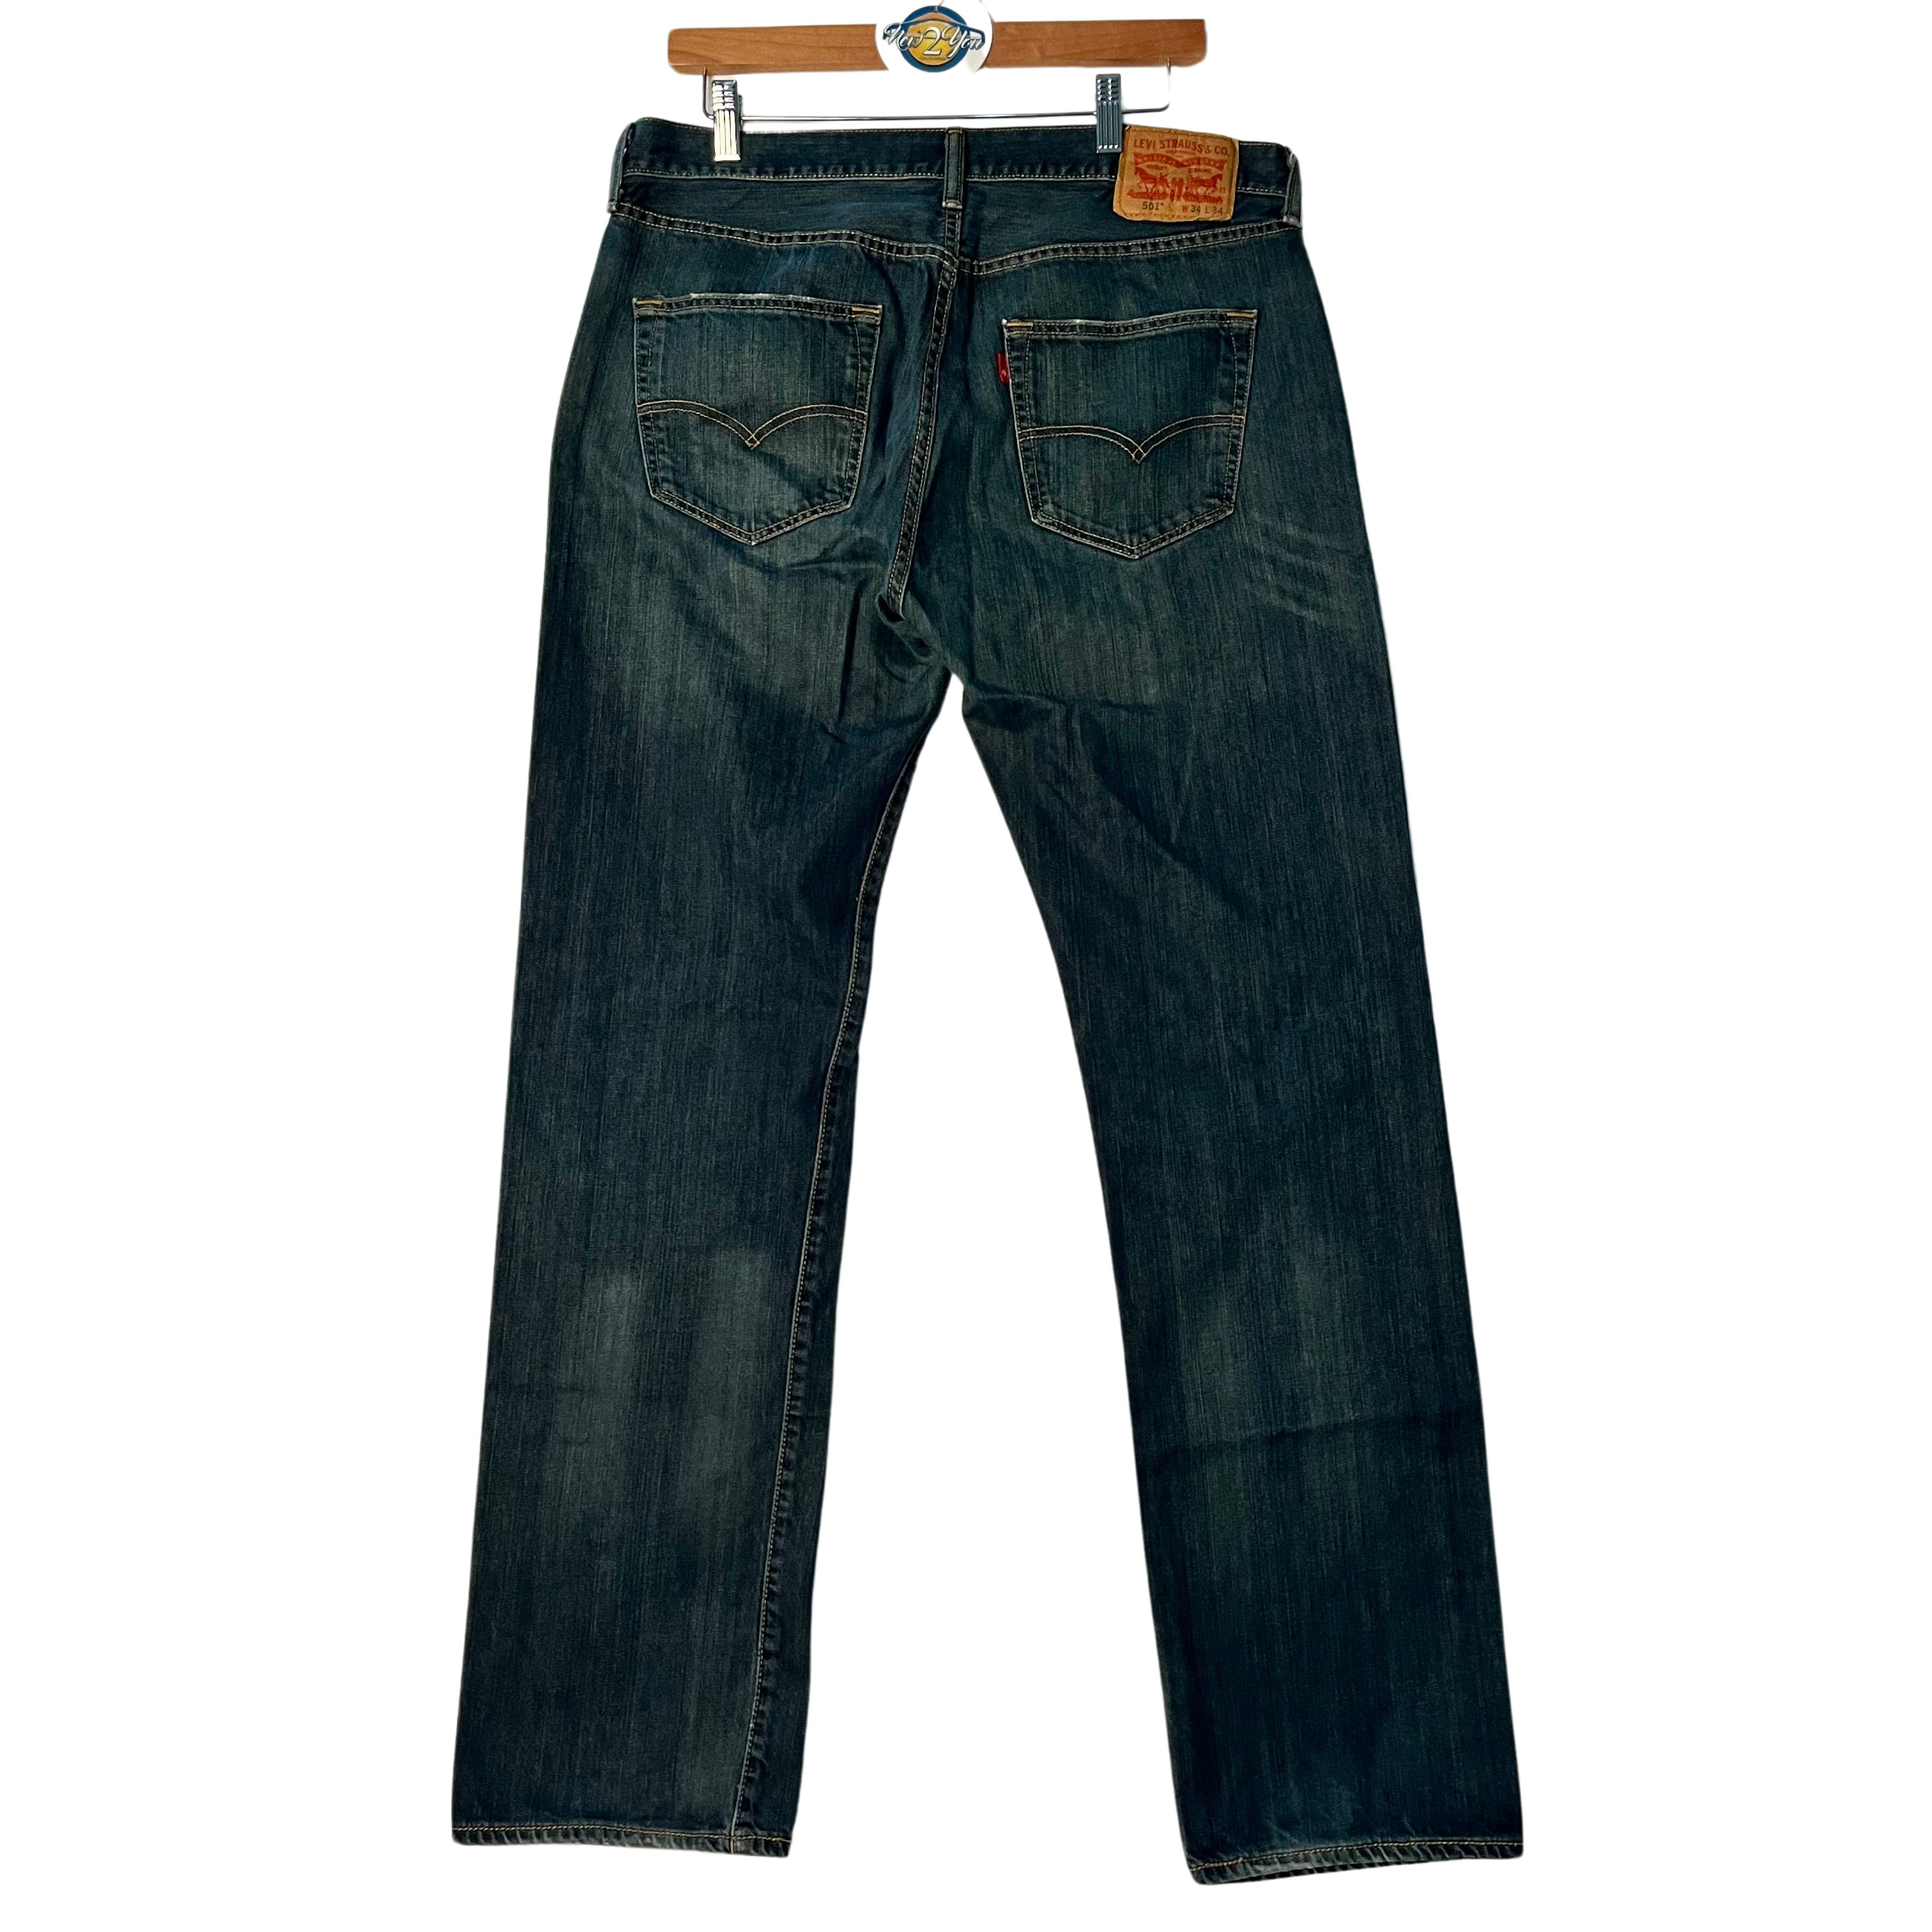 Levi Strauss Co. 501 Men's Jeans